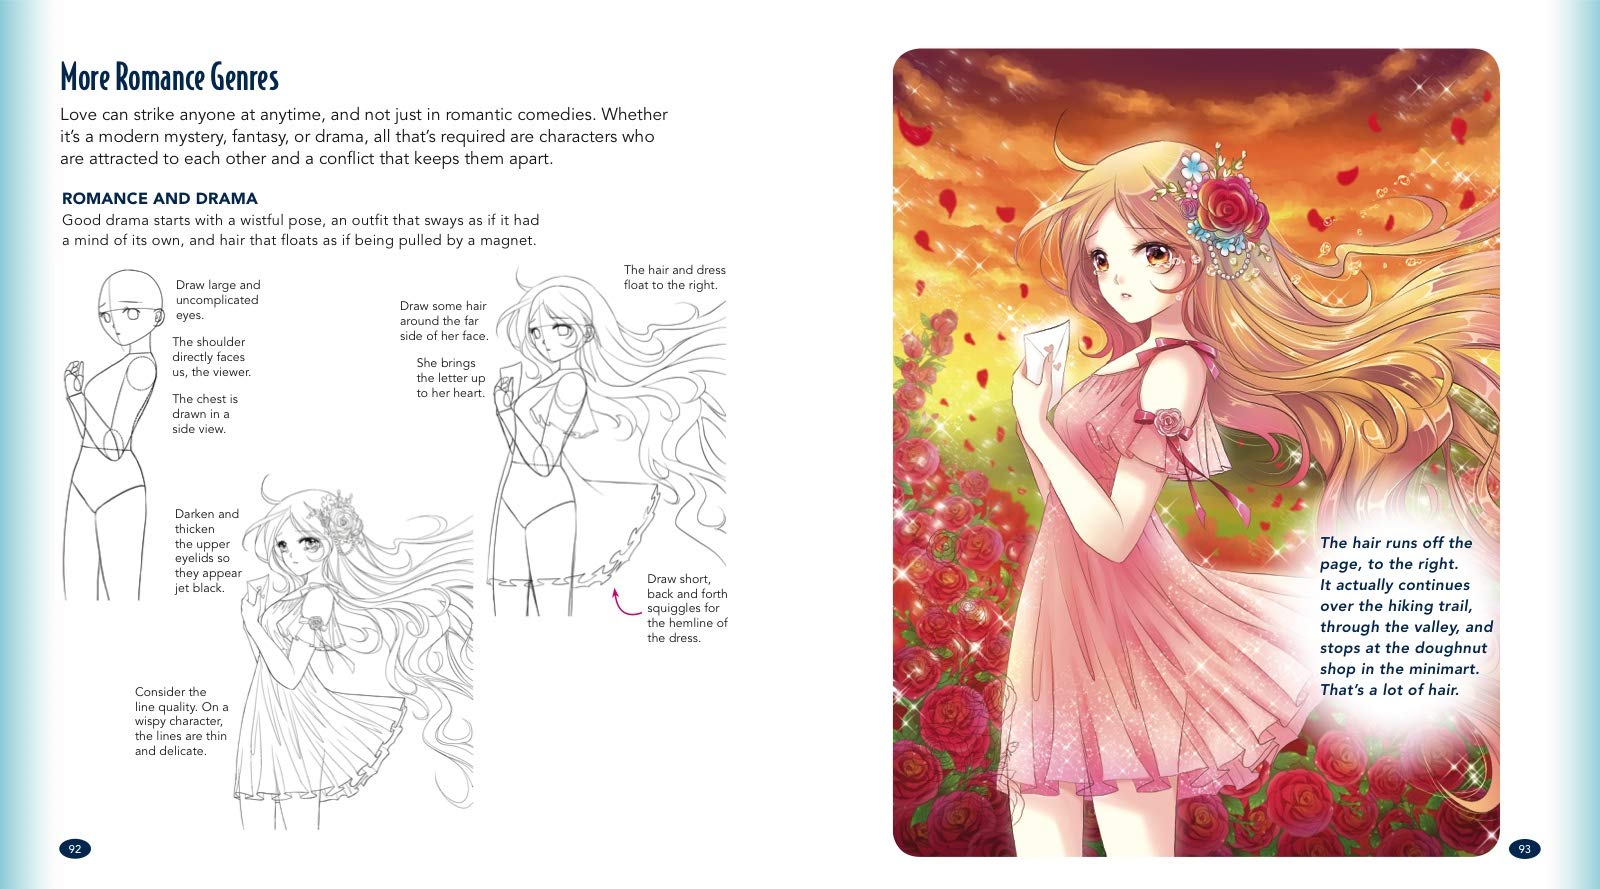 Mua The Master Guide to Drawing Anime: Romance: How to Draw Popular  Character Types Step by Step (Volume 4) trên Amazon Mỹ chính hãng 2023 |  Fado